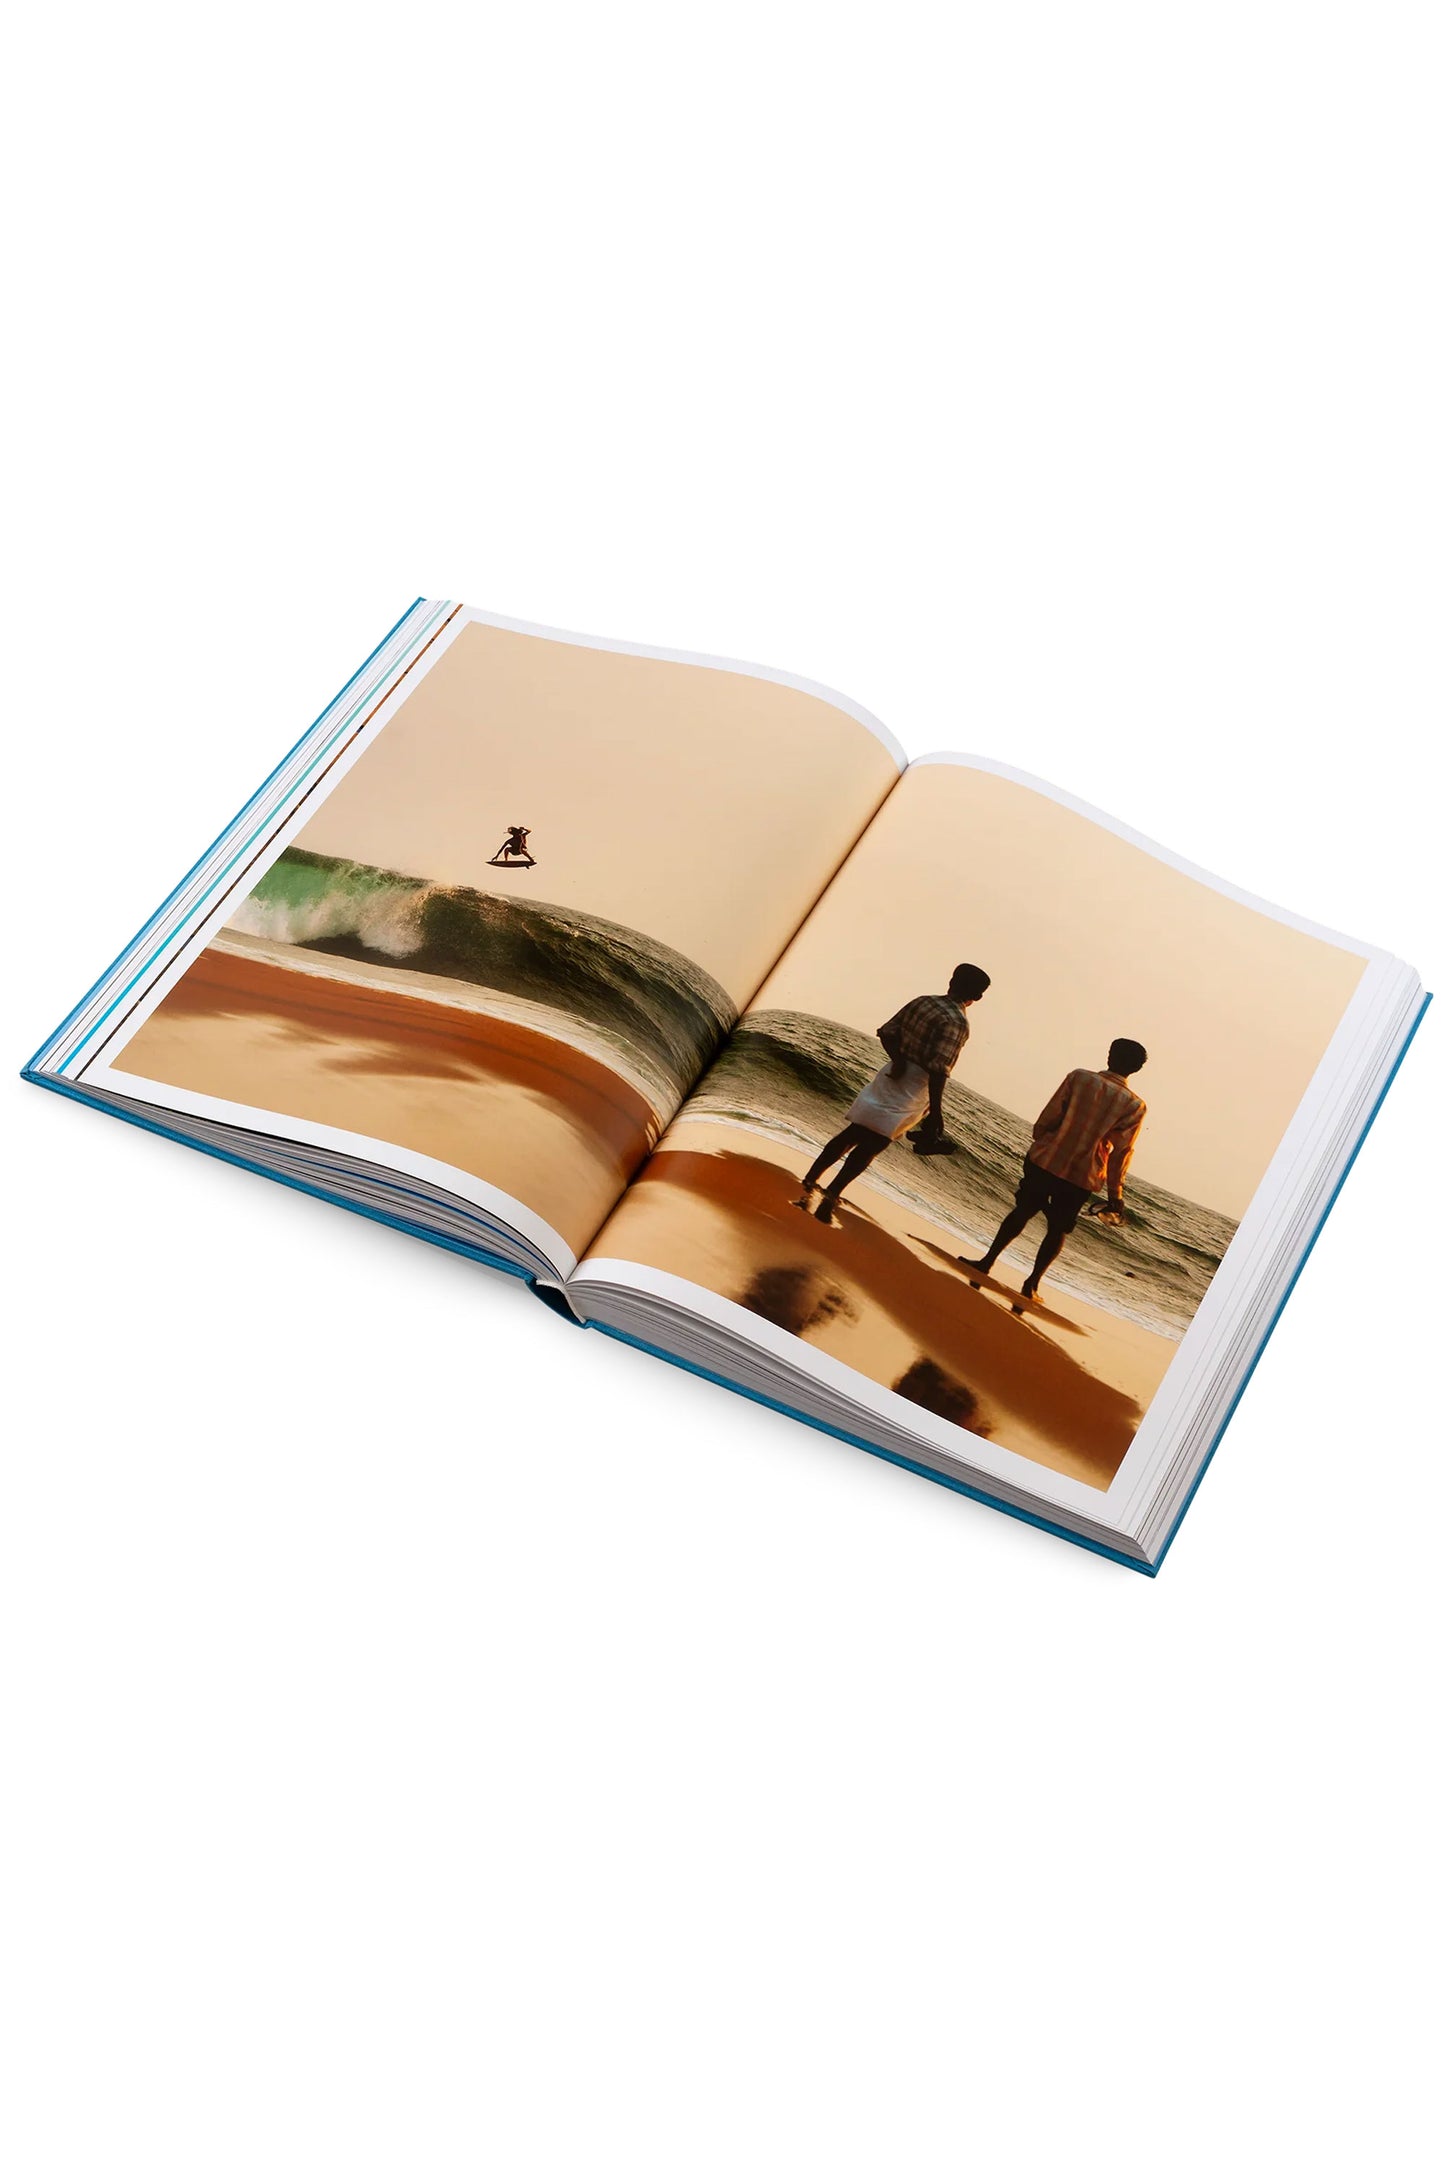 
                  
                    Pukas-Surf-Shop-geltalten-the-oceans-book
                  
                